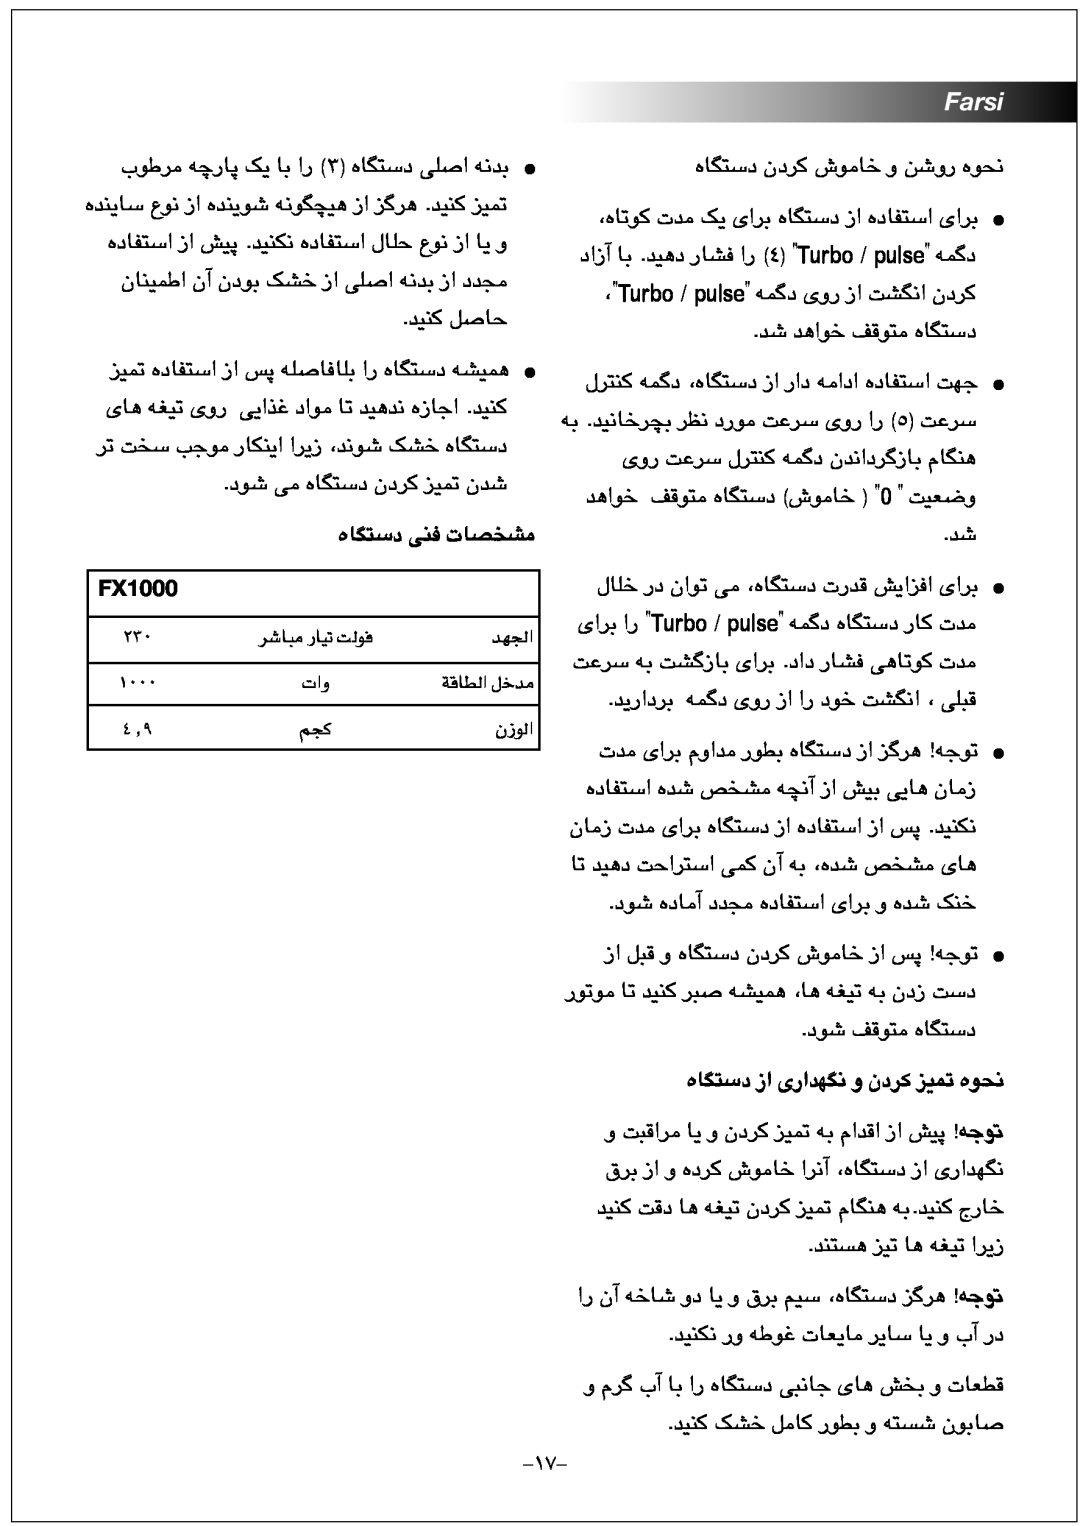 Black & Decker FX1000 manual ó¡édG, ¿RƒdG, Farsi, ﻩﺎﮕﺘﺳﺩ ﯽﻨﻓ ﺕﺎﺼﺨﺸﻣ, ﻩﺎﮕﺘﺳﺩ ﺯﺍ ﯼﺭﺍﺪﻬﮕﻧ ﻭ ﻥﺩﺮﮐ ﺰﯿﻤﺗ ﻩﻮﺤﻧ 